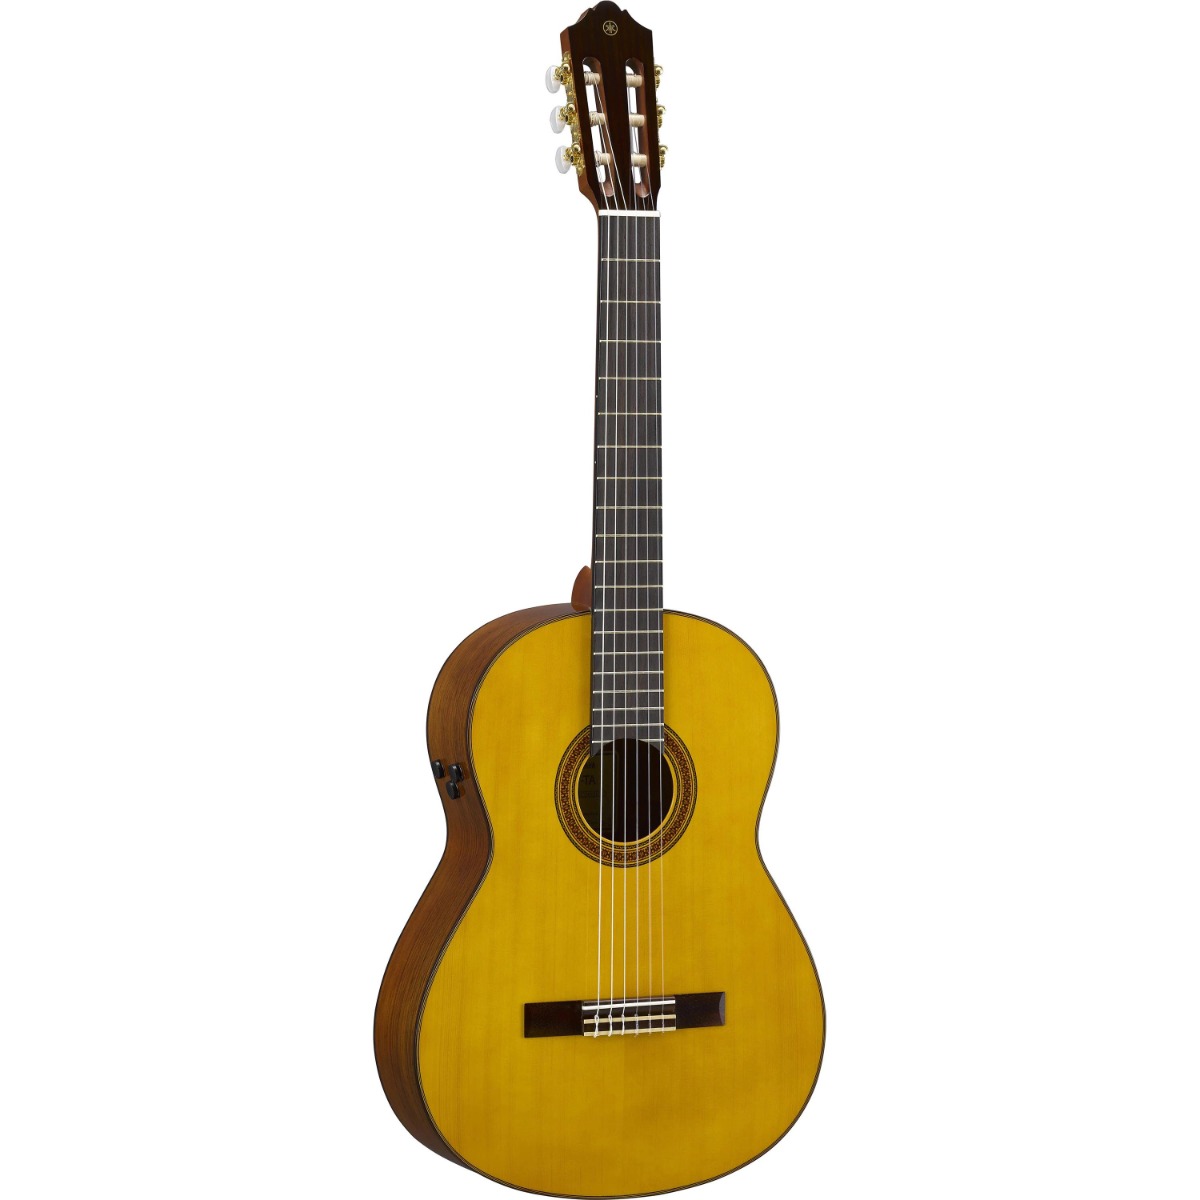 CG-TA TransAcoustic Classical Acoustic Guitar